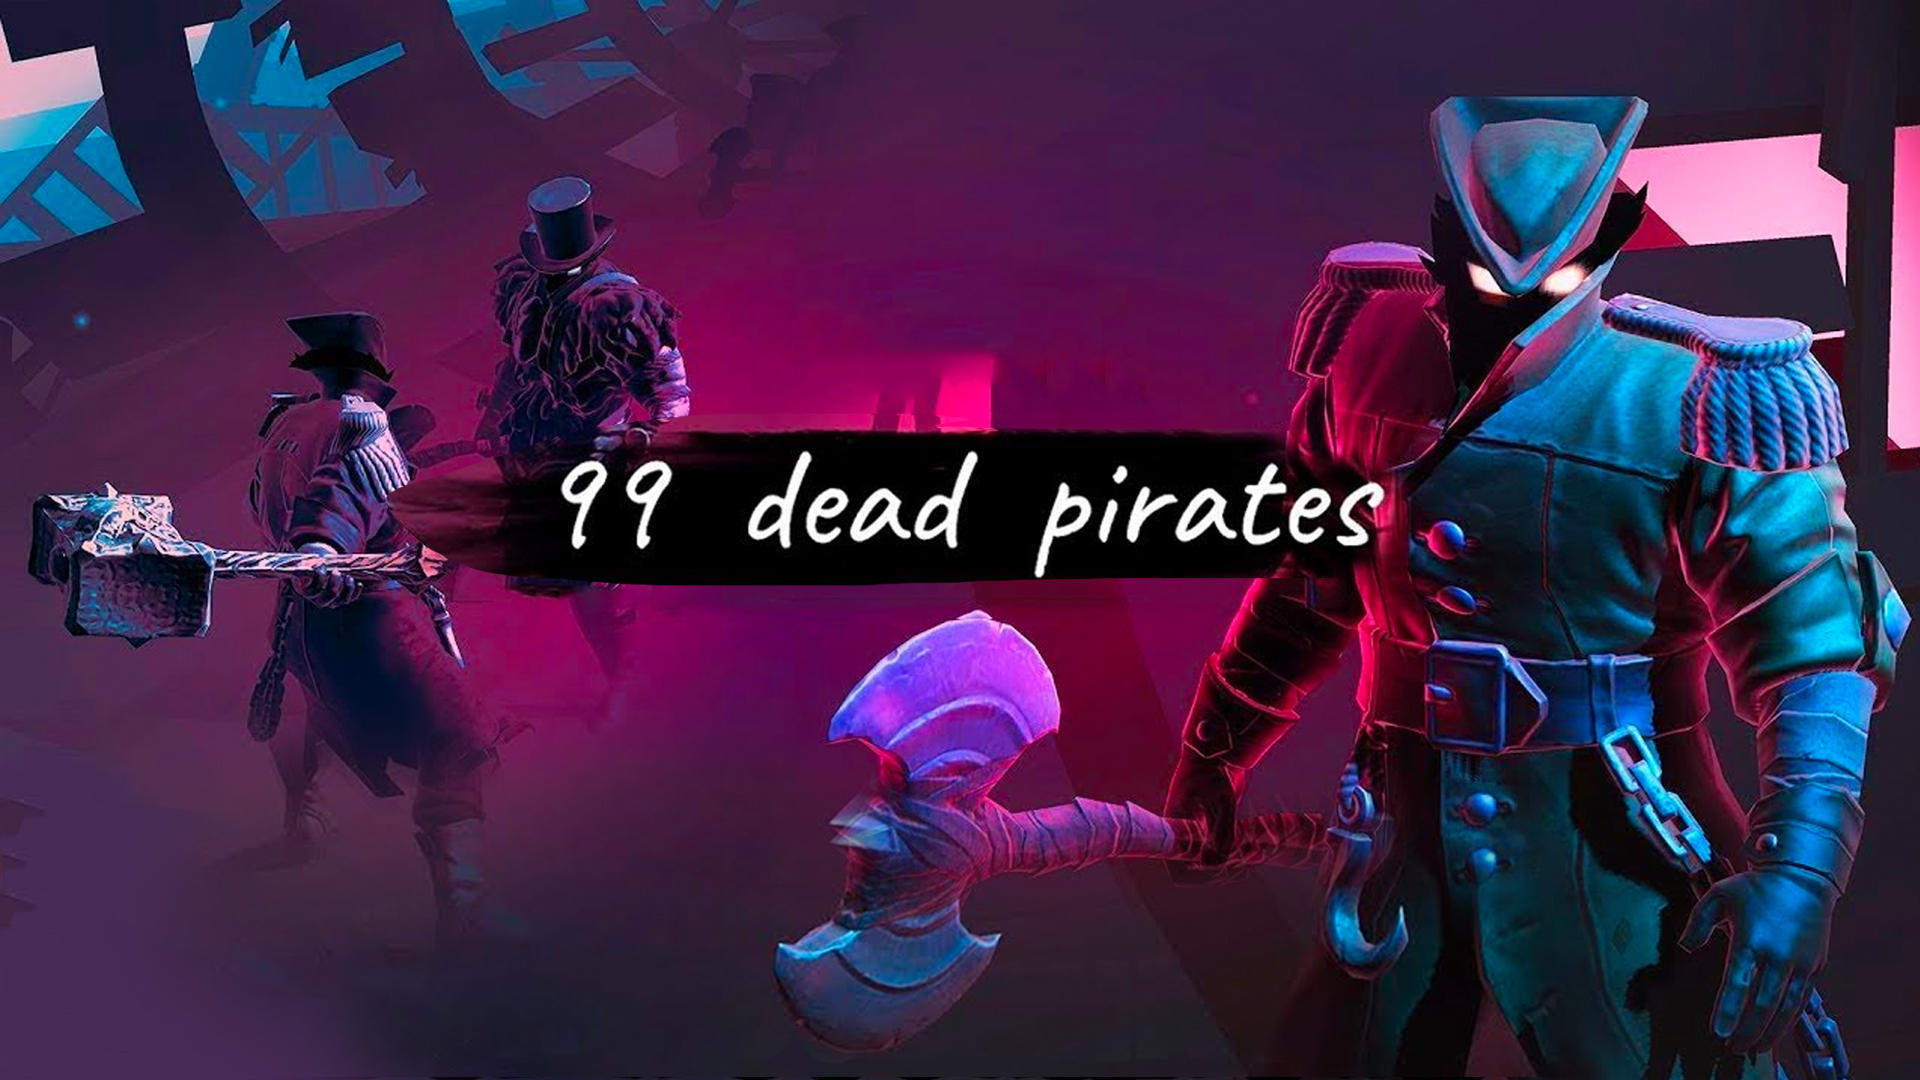 Banner of 99 piratas mortos 1.22